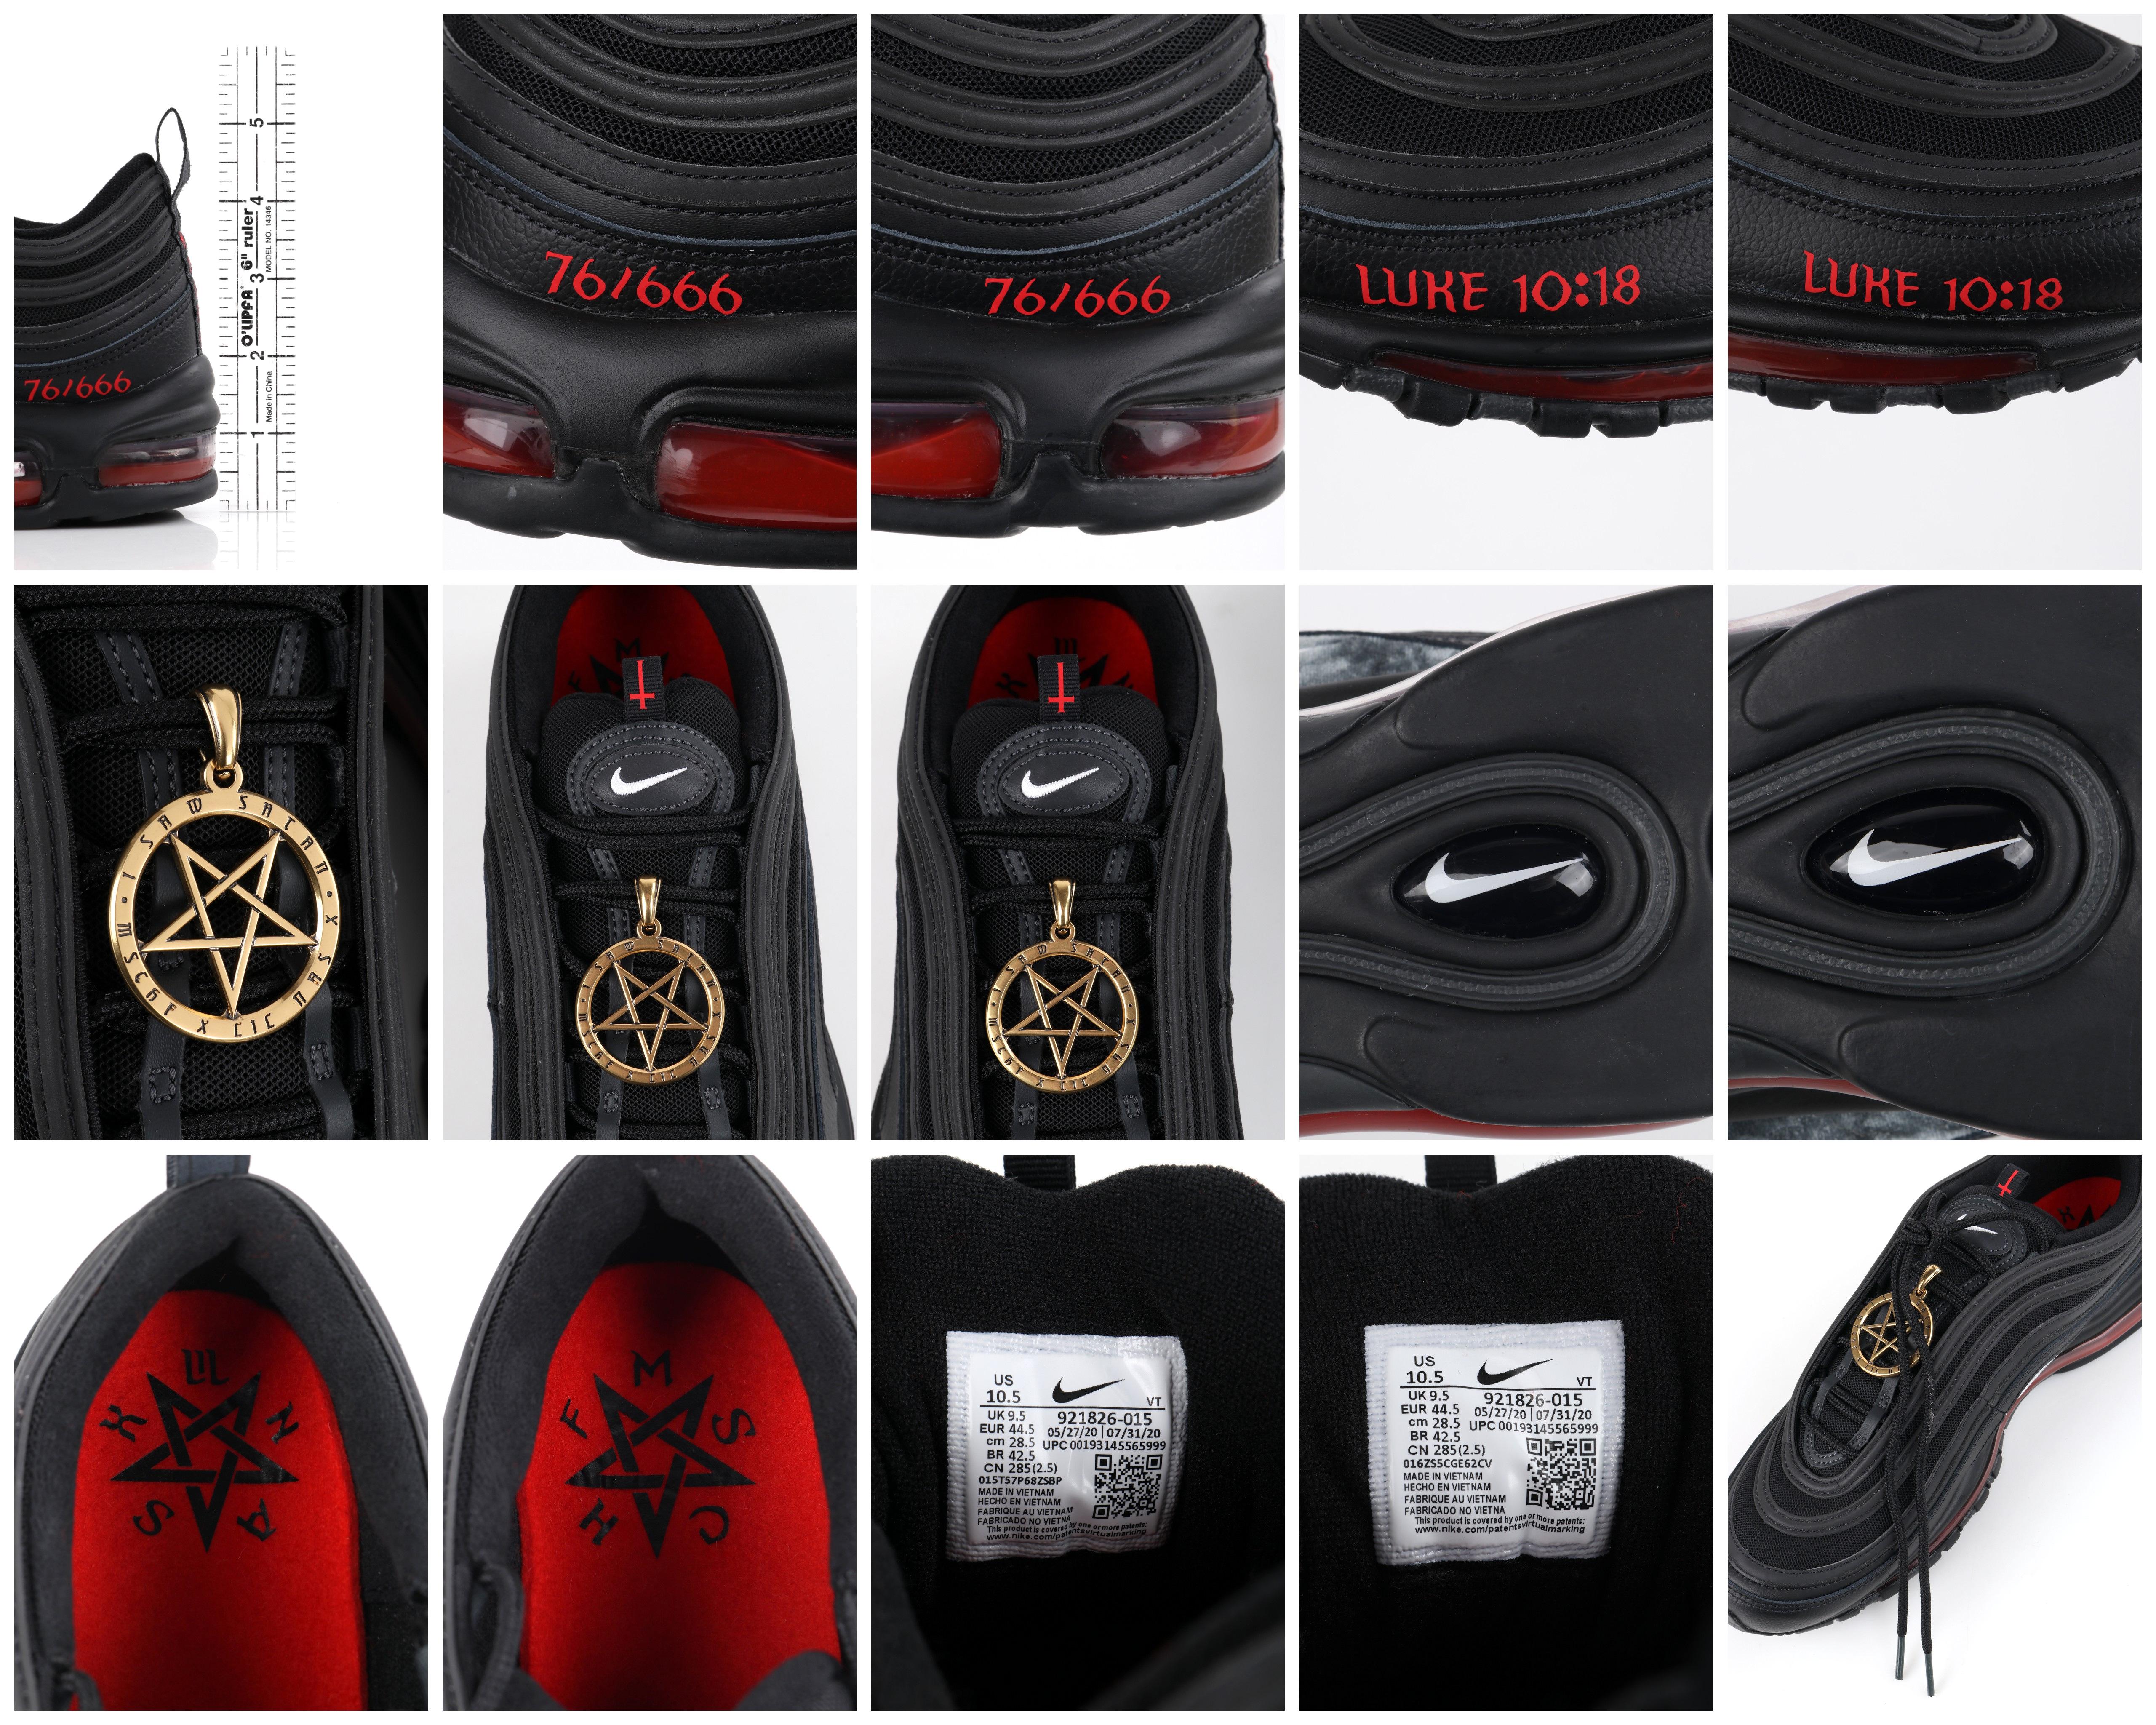 MSCHF & Lil Nas X “Satan” Limited Edition Black Nike Air Max Sneakers 76/666 NIB For Sale 4